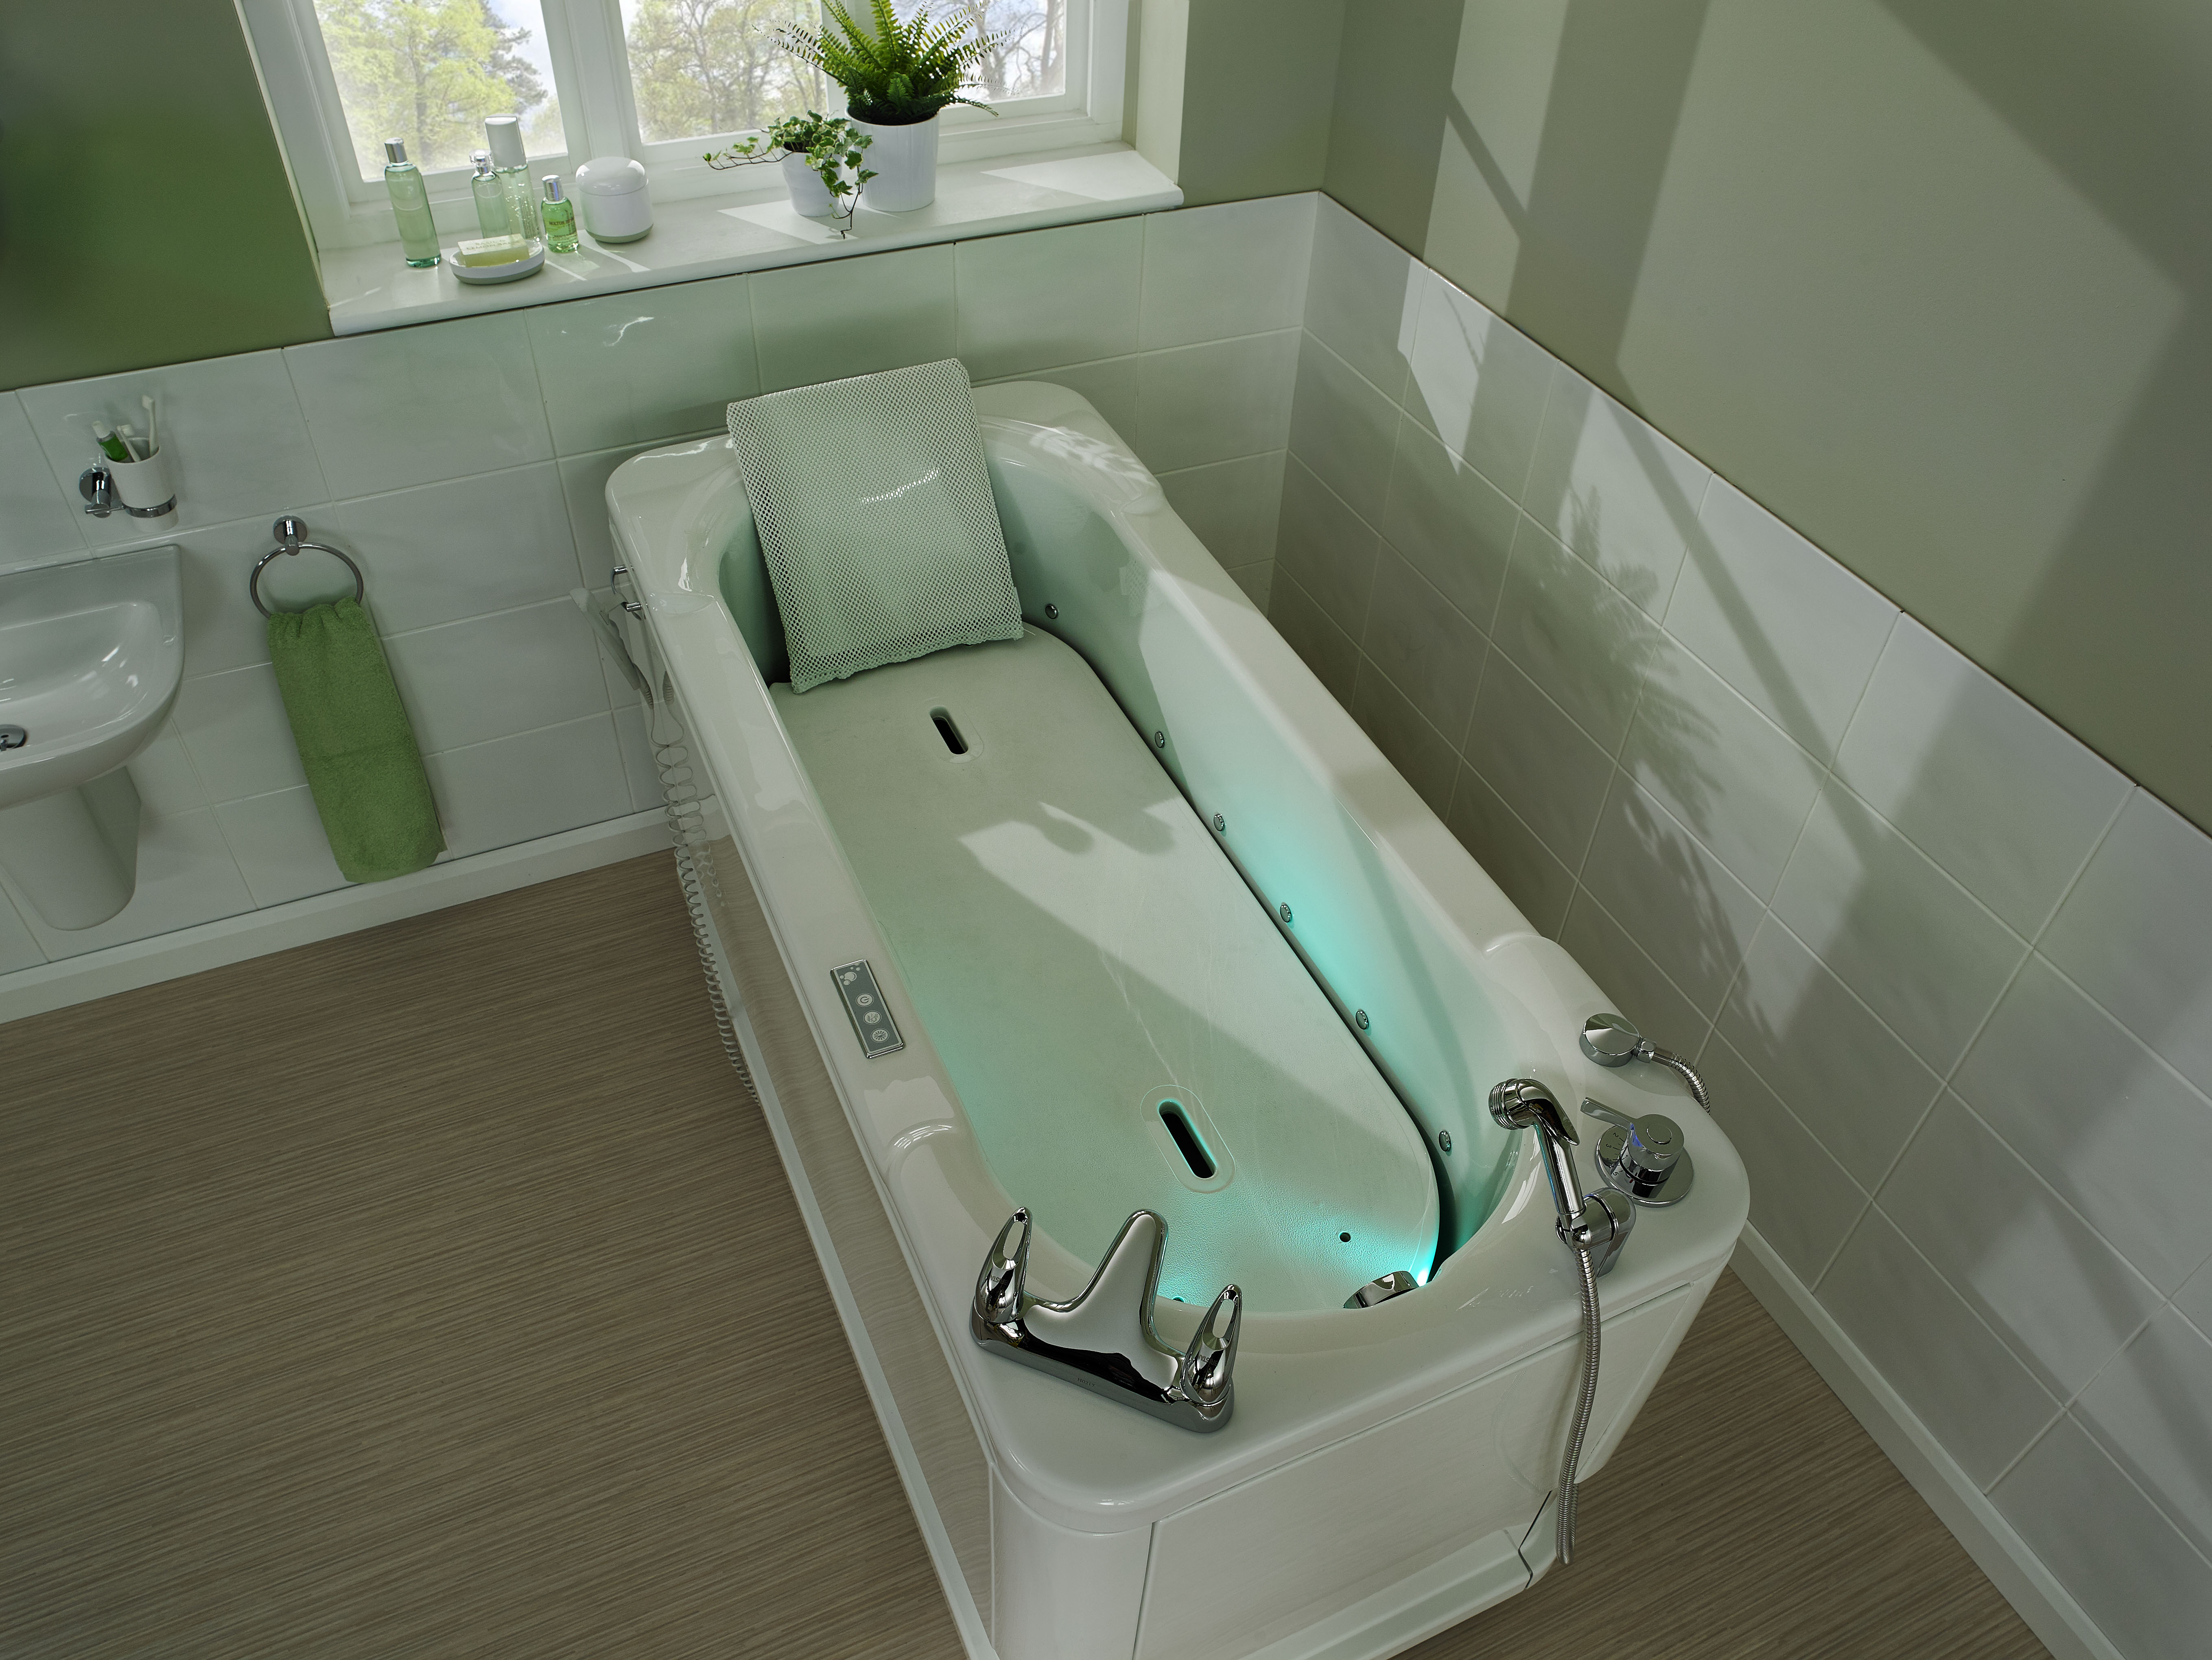 Gemini 1700 height adjustable bath with green LED lights